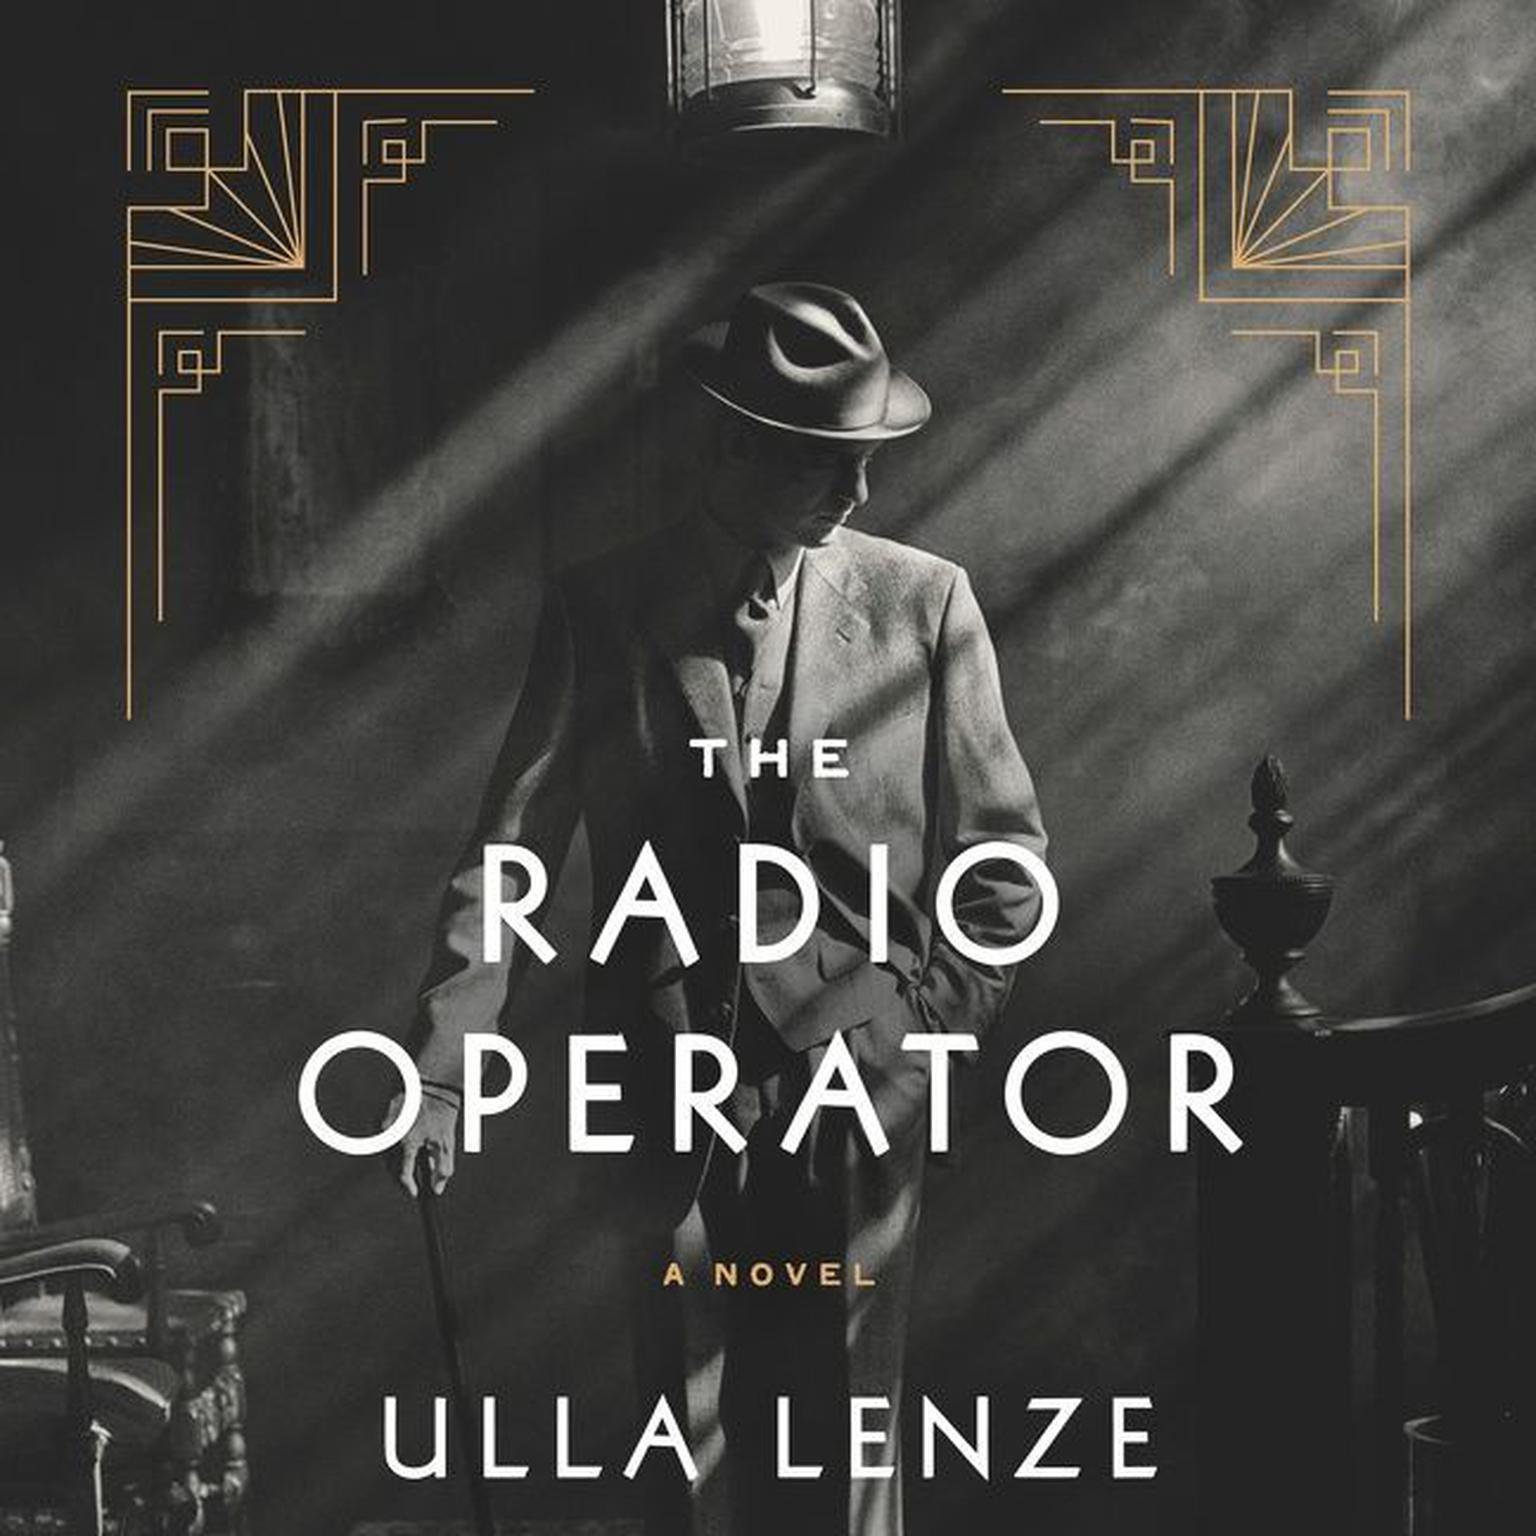 The Radio Operator: A Novel Audiobook, by Ulla Lenze